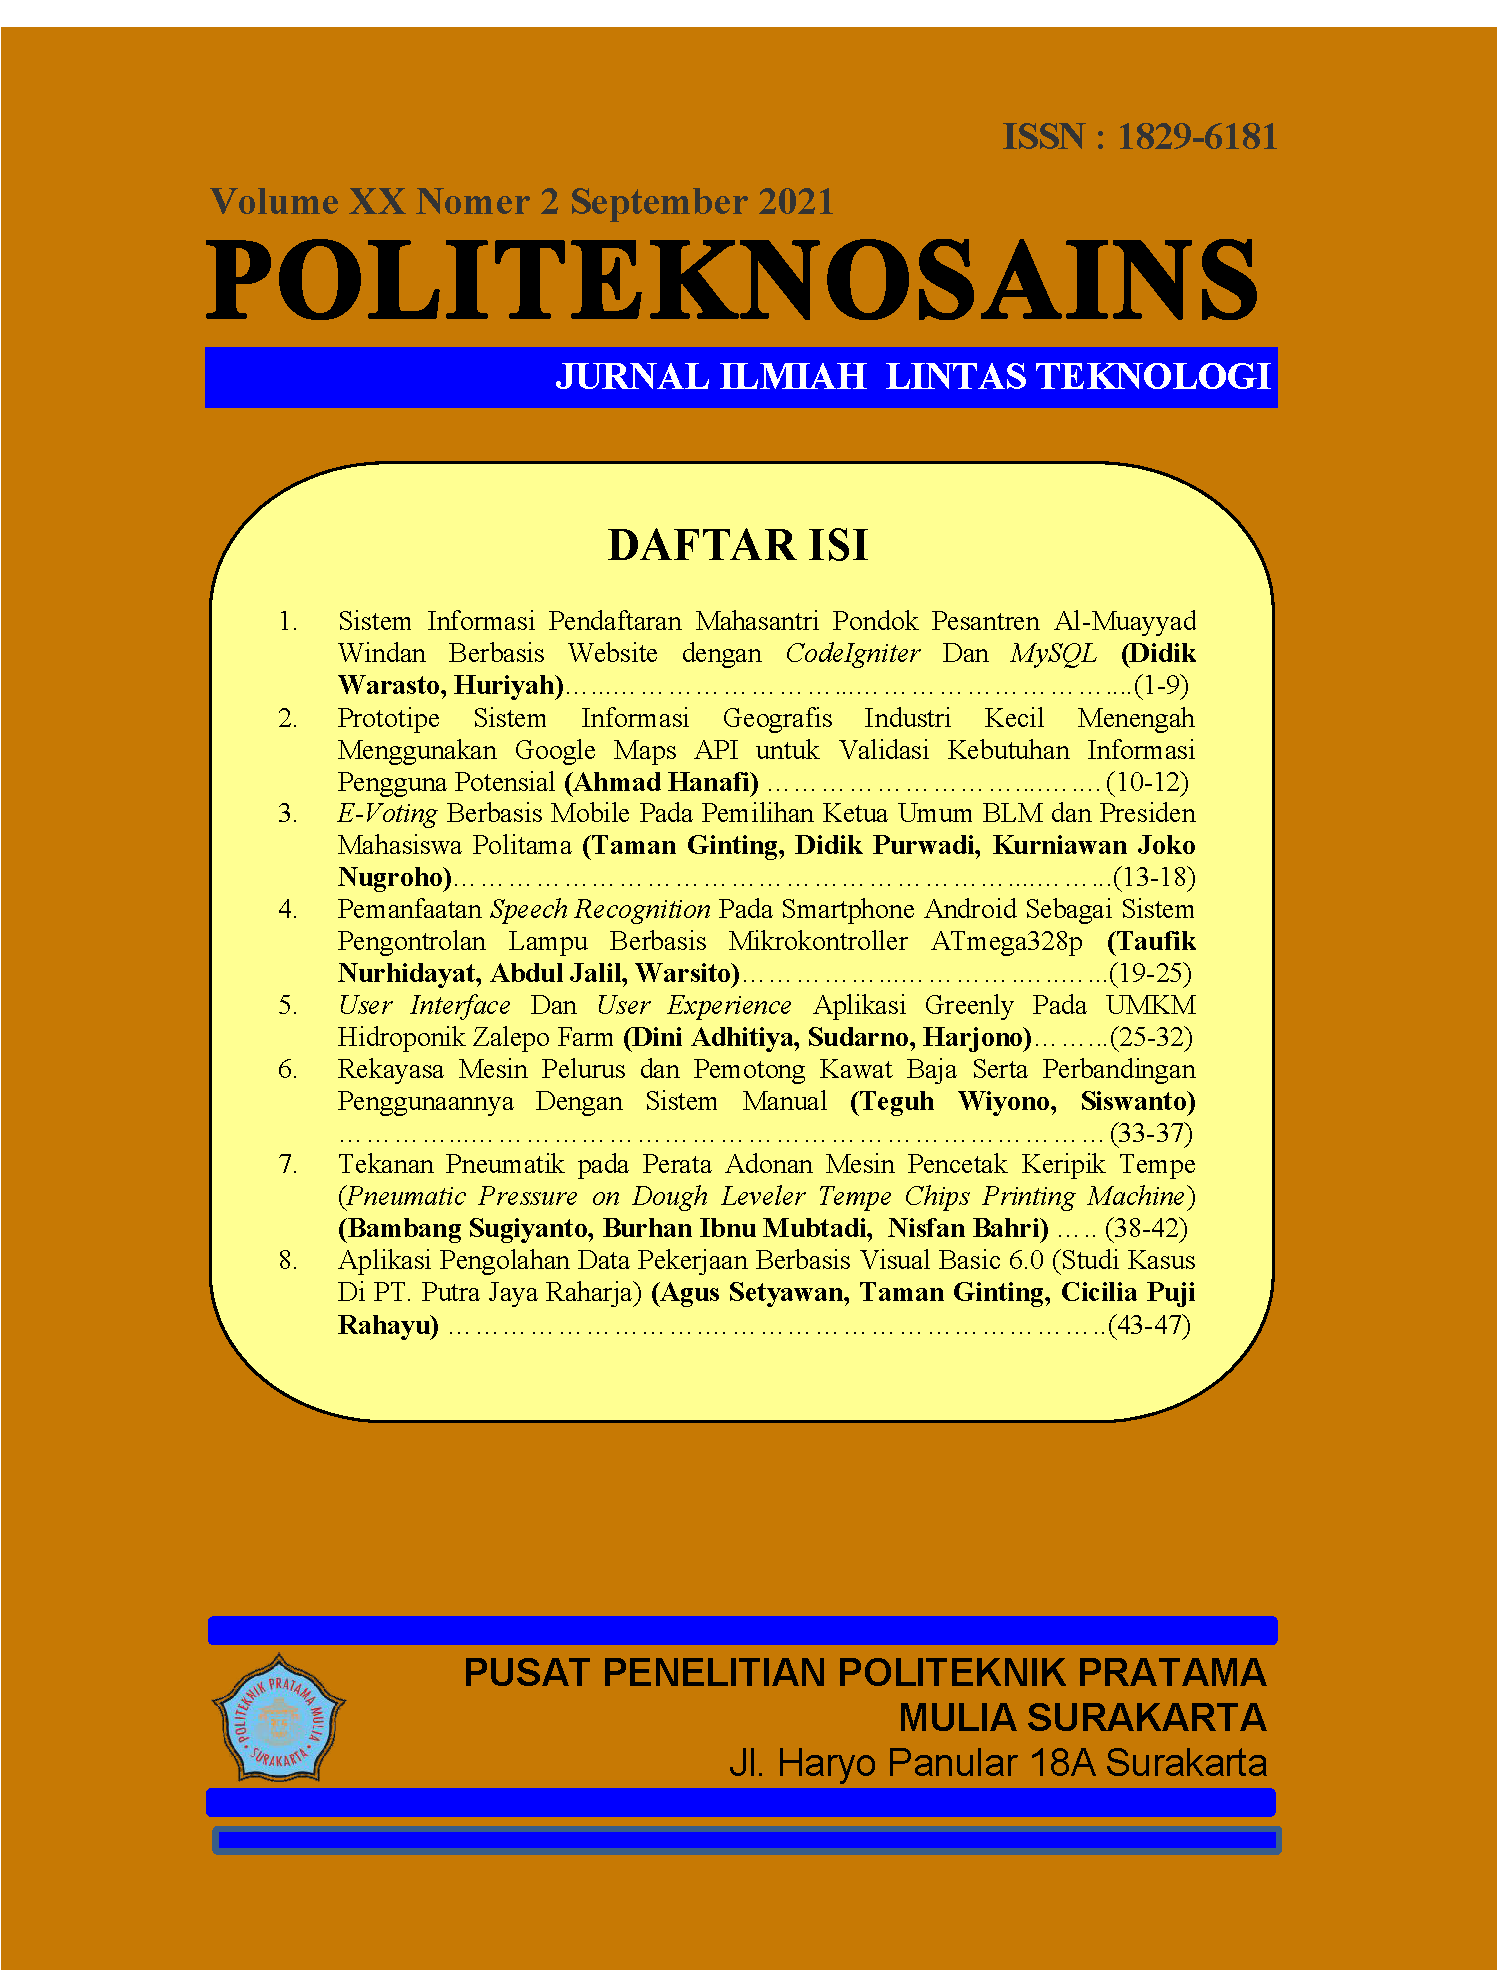 					Lihat Vol 20 No 2 (2021): Jurnal Politeknosains Volume 20 Nomor 2 - September 2021
				